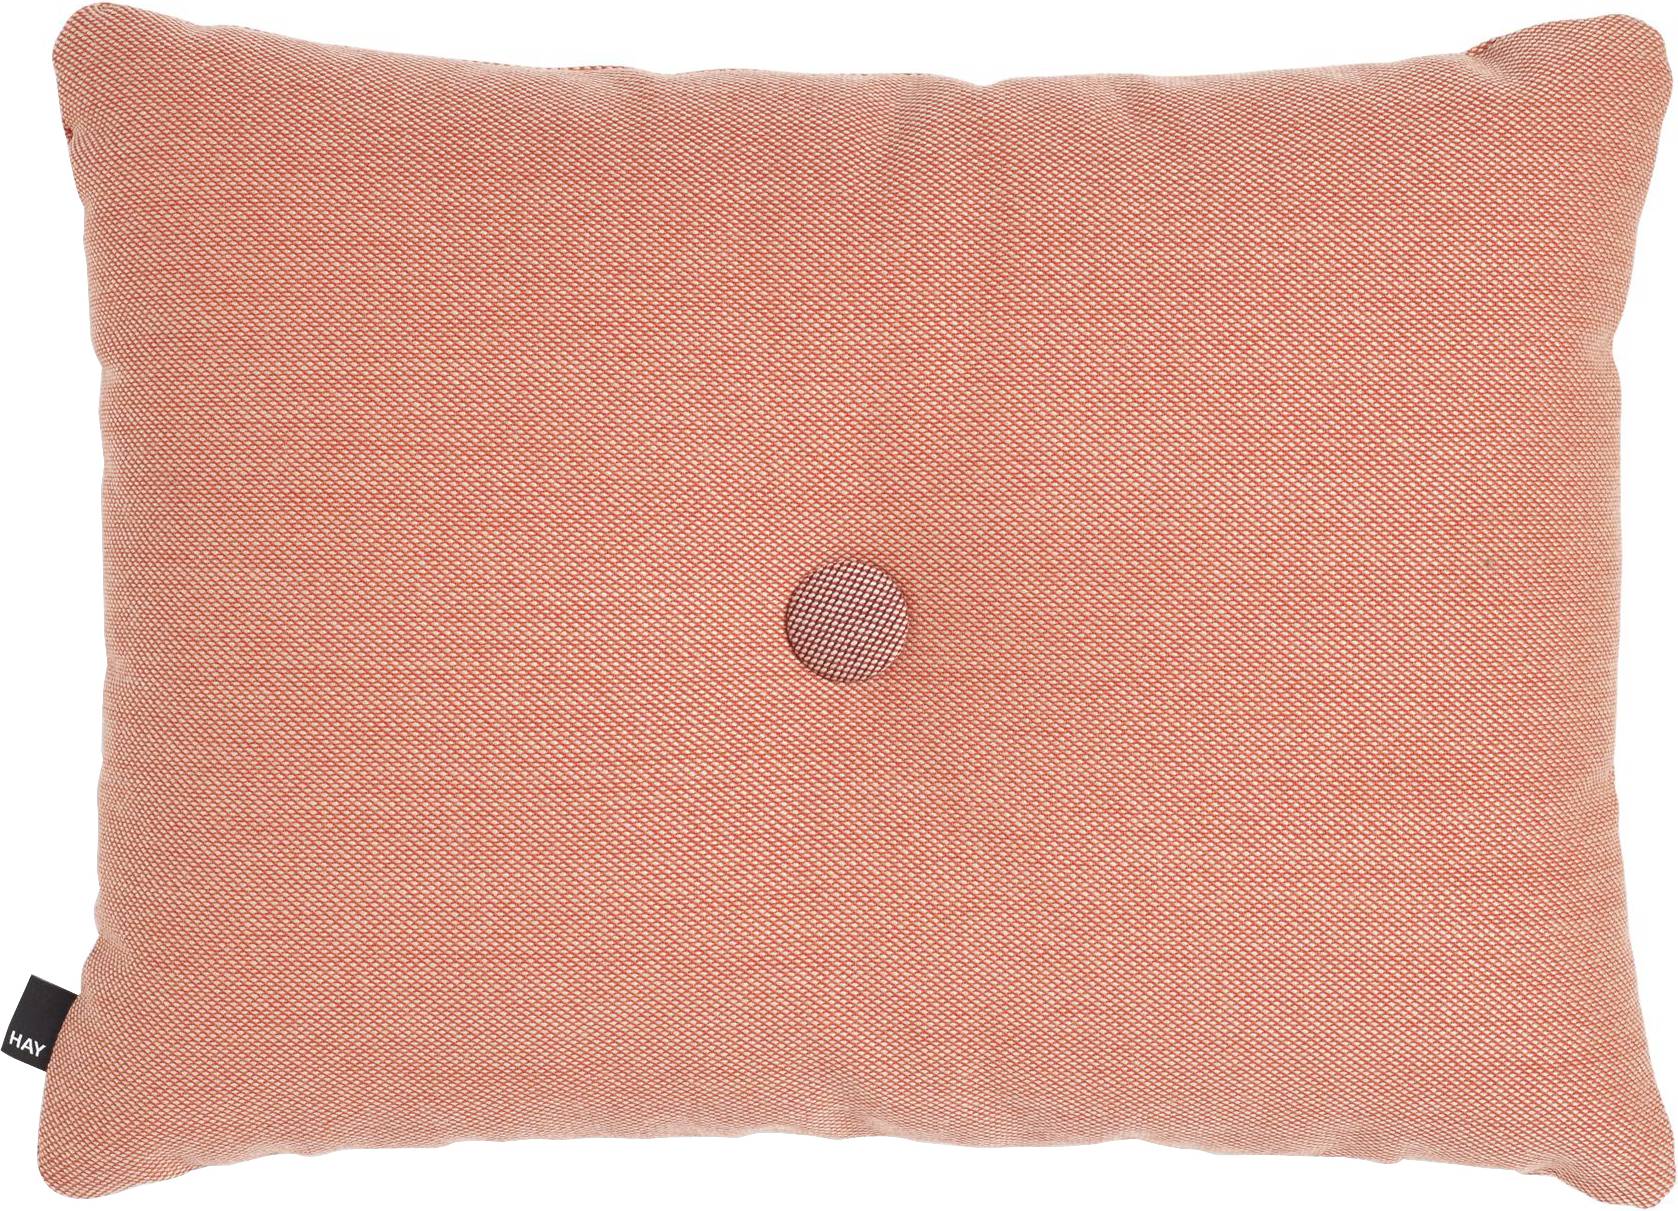  Bild på Hay 1 Dot Scatter cushions Komplett dekorationskudde Orange (60x45cm) prydnadskudde